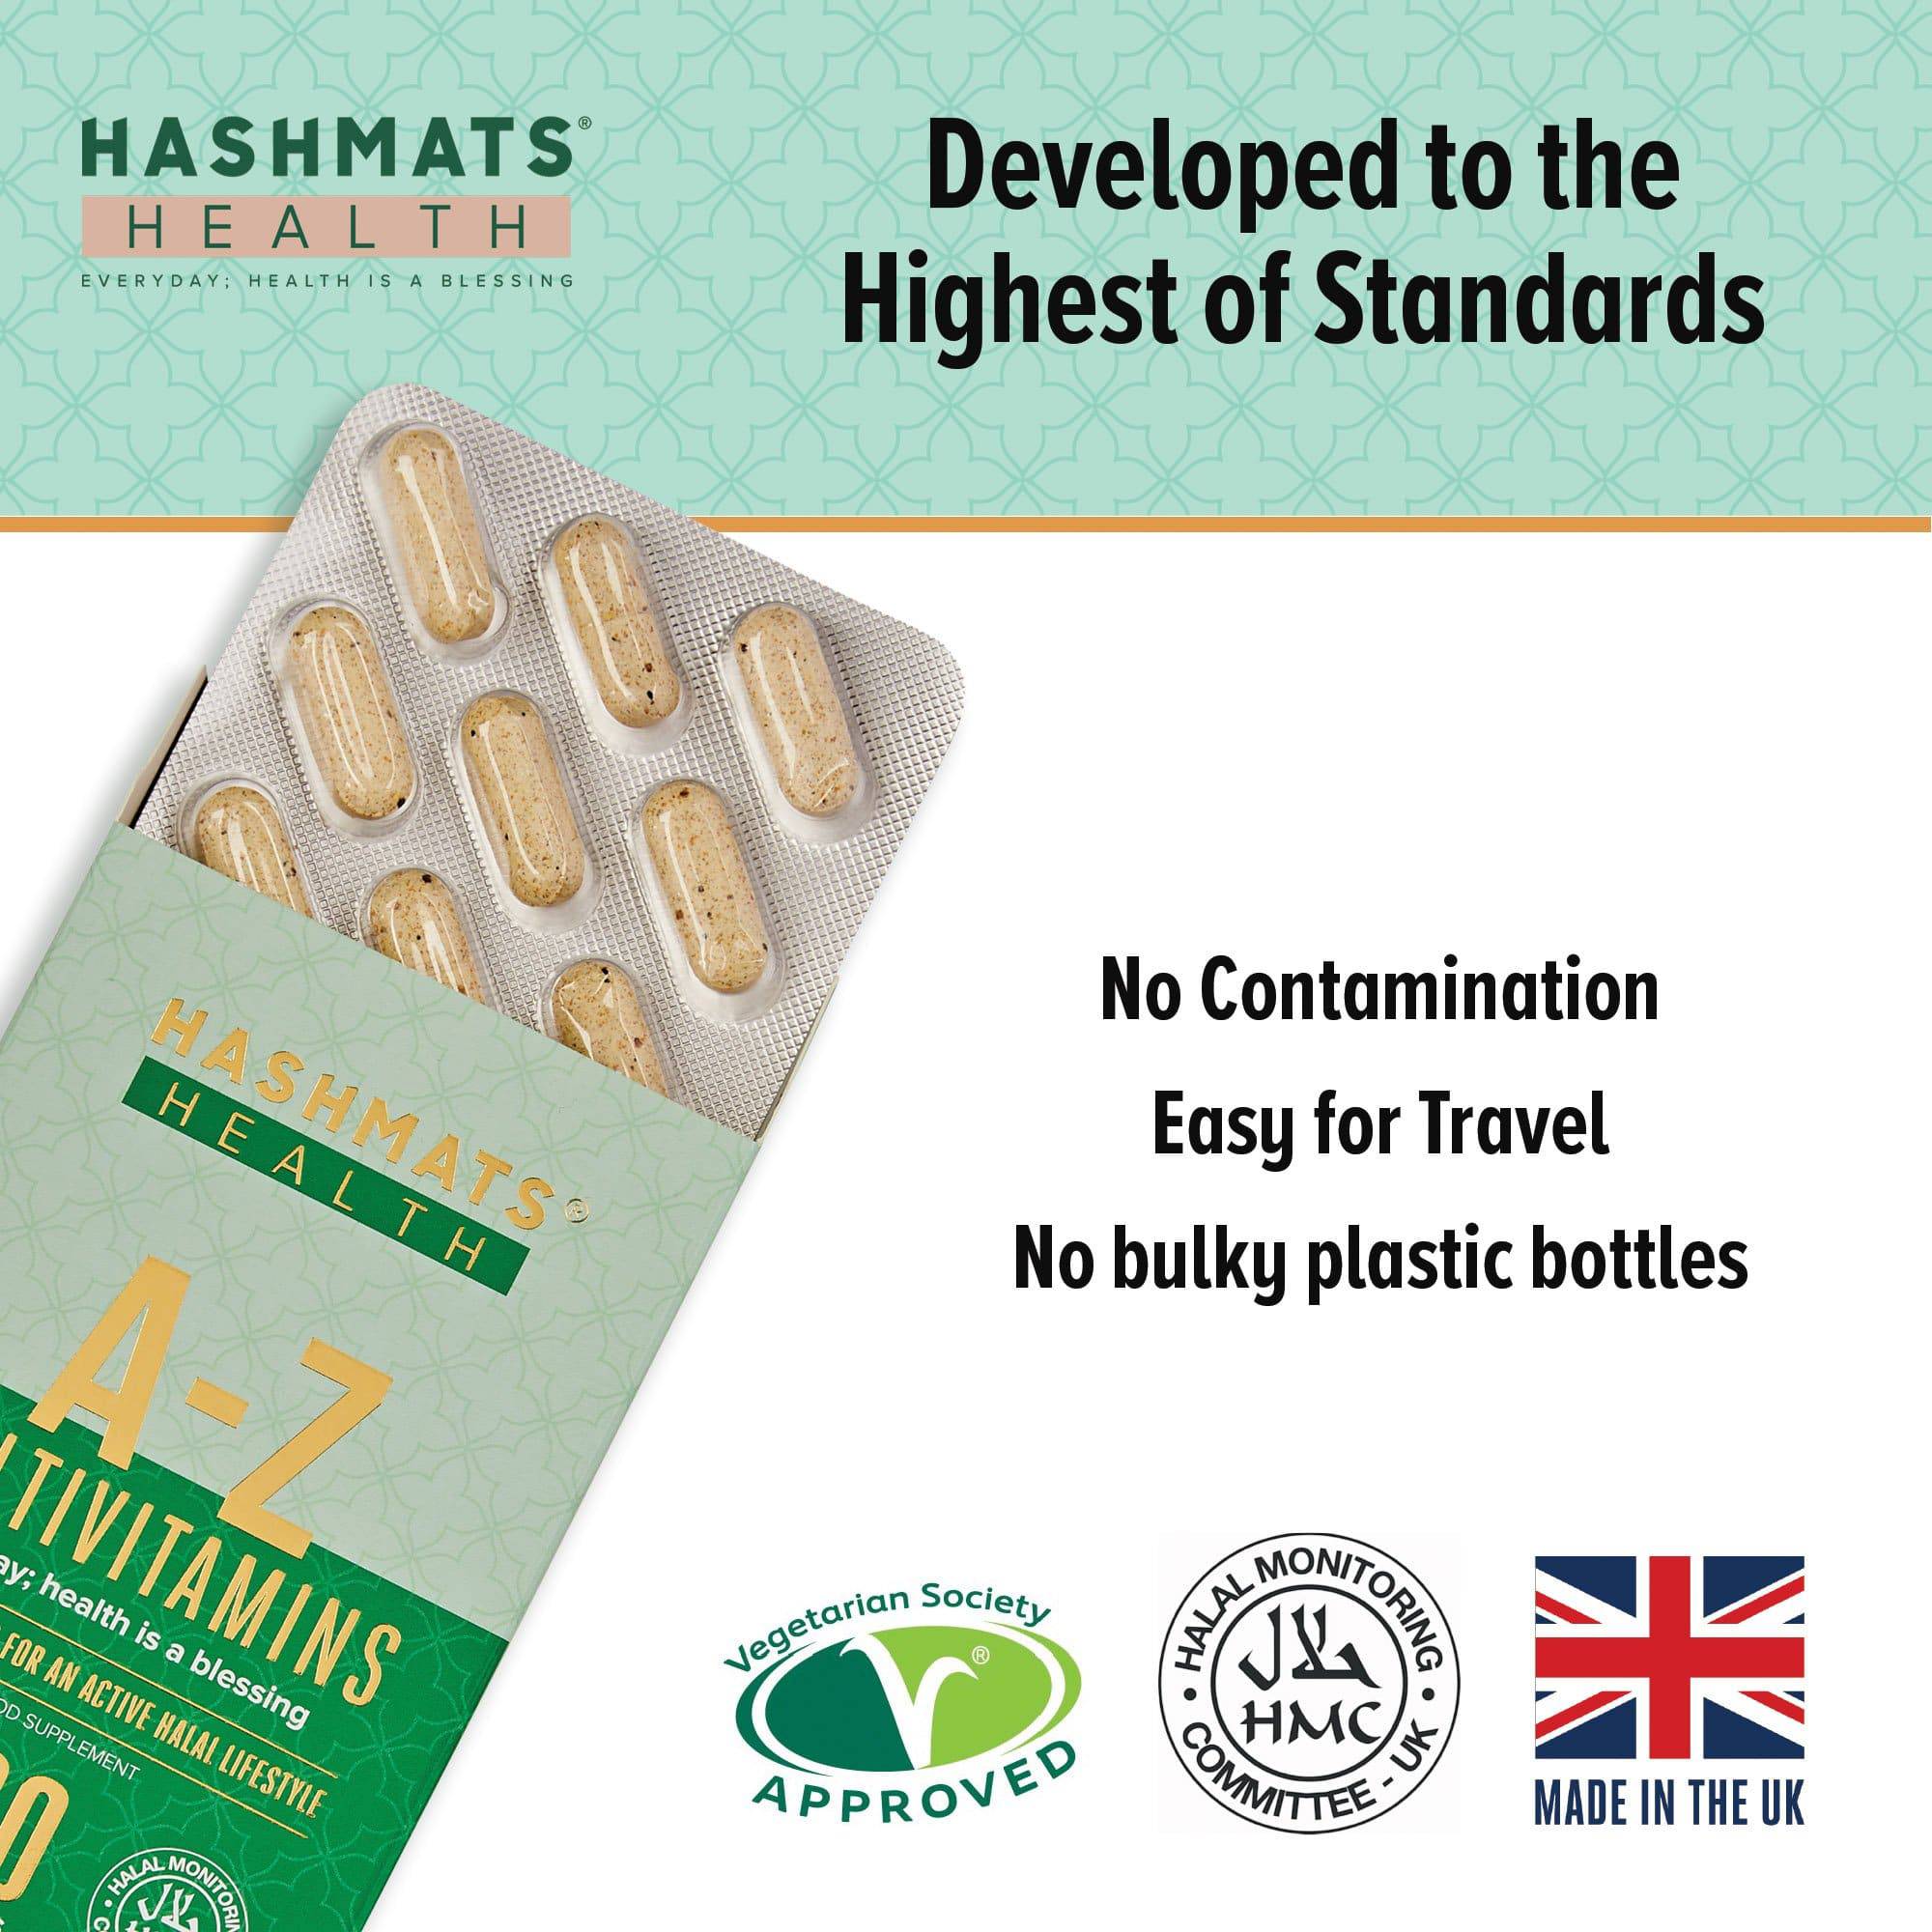 halal vitamins A-Z Multivitamins 90 - with 33 Bio-elements by HASHMATS® - Hashmats Health